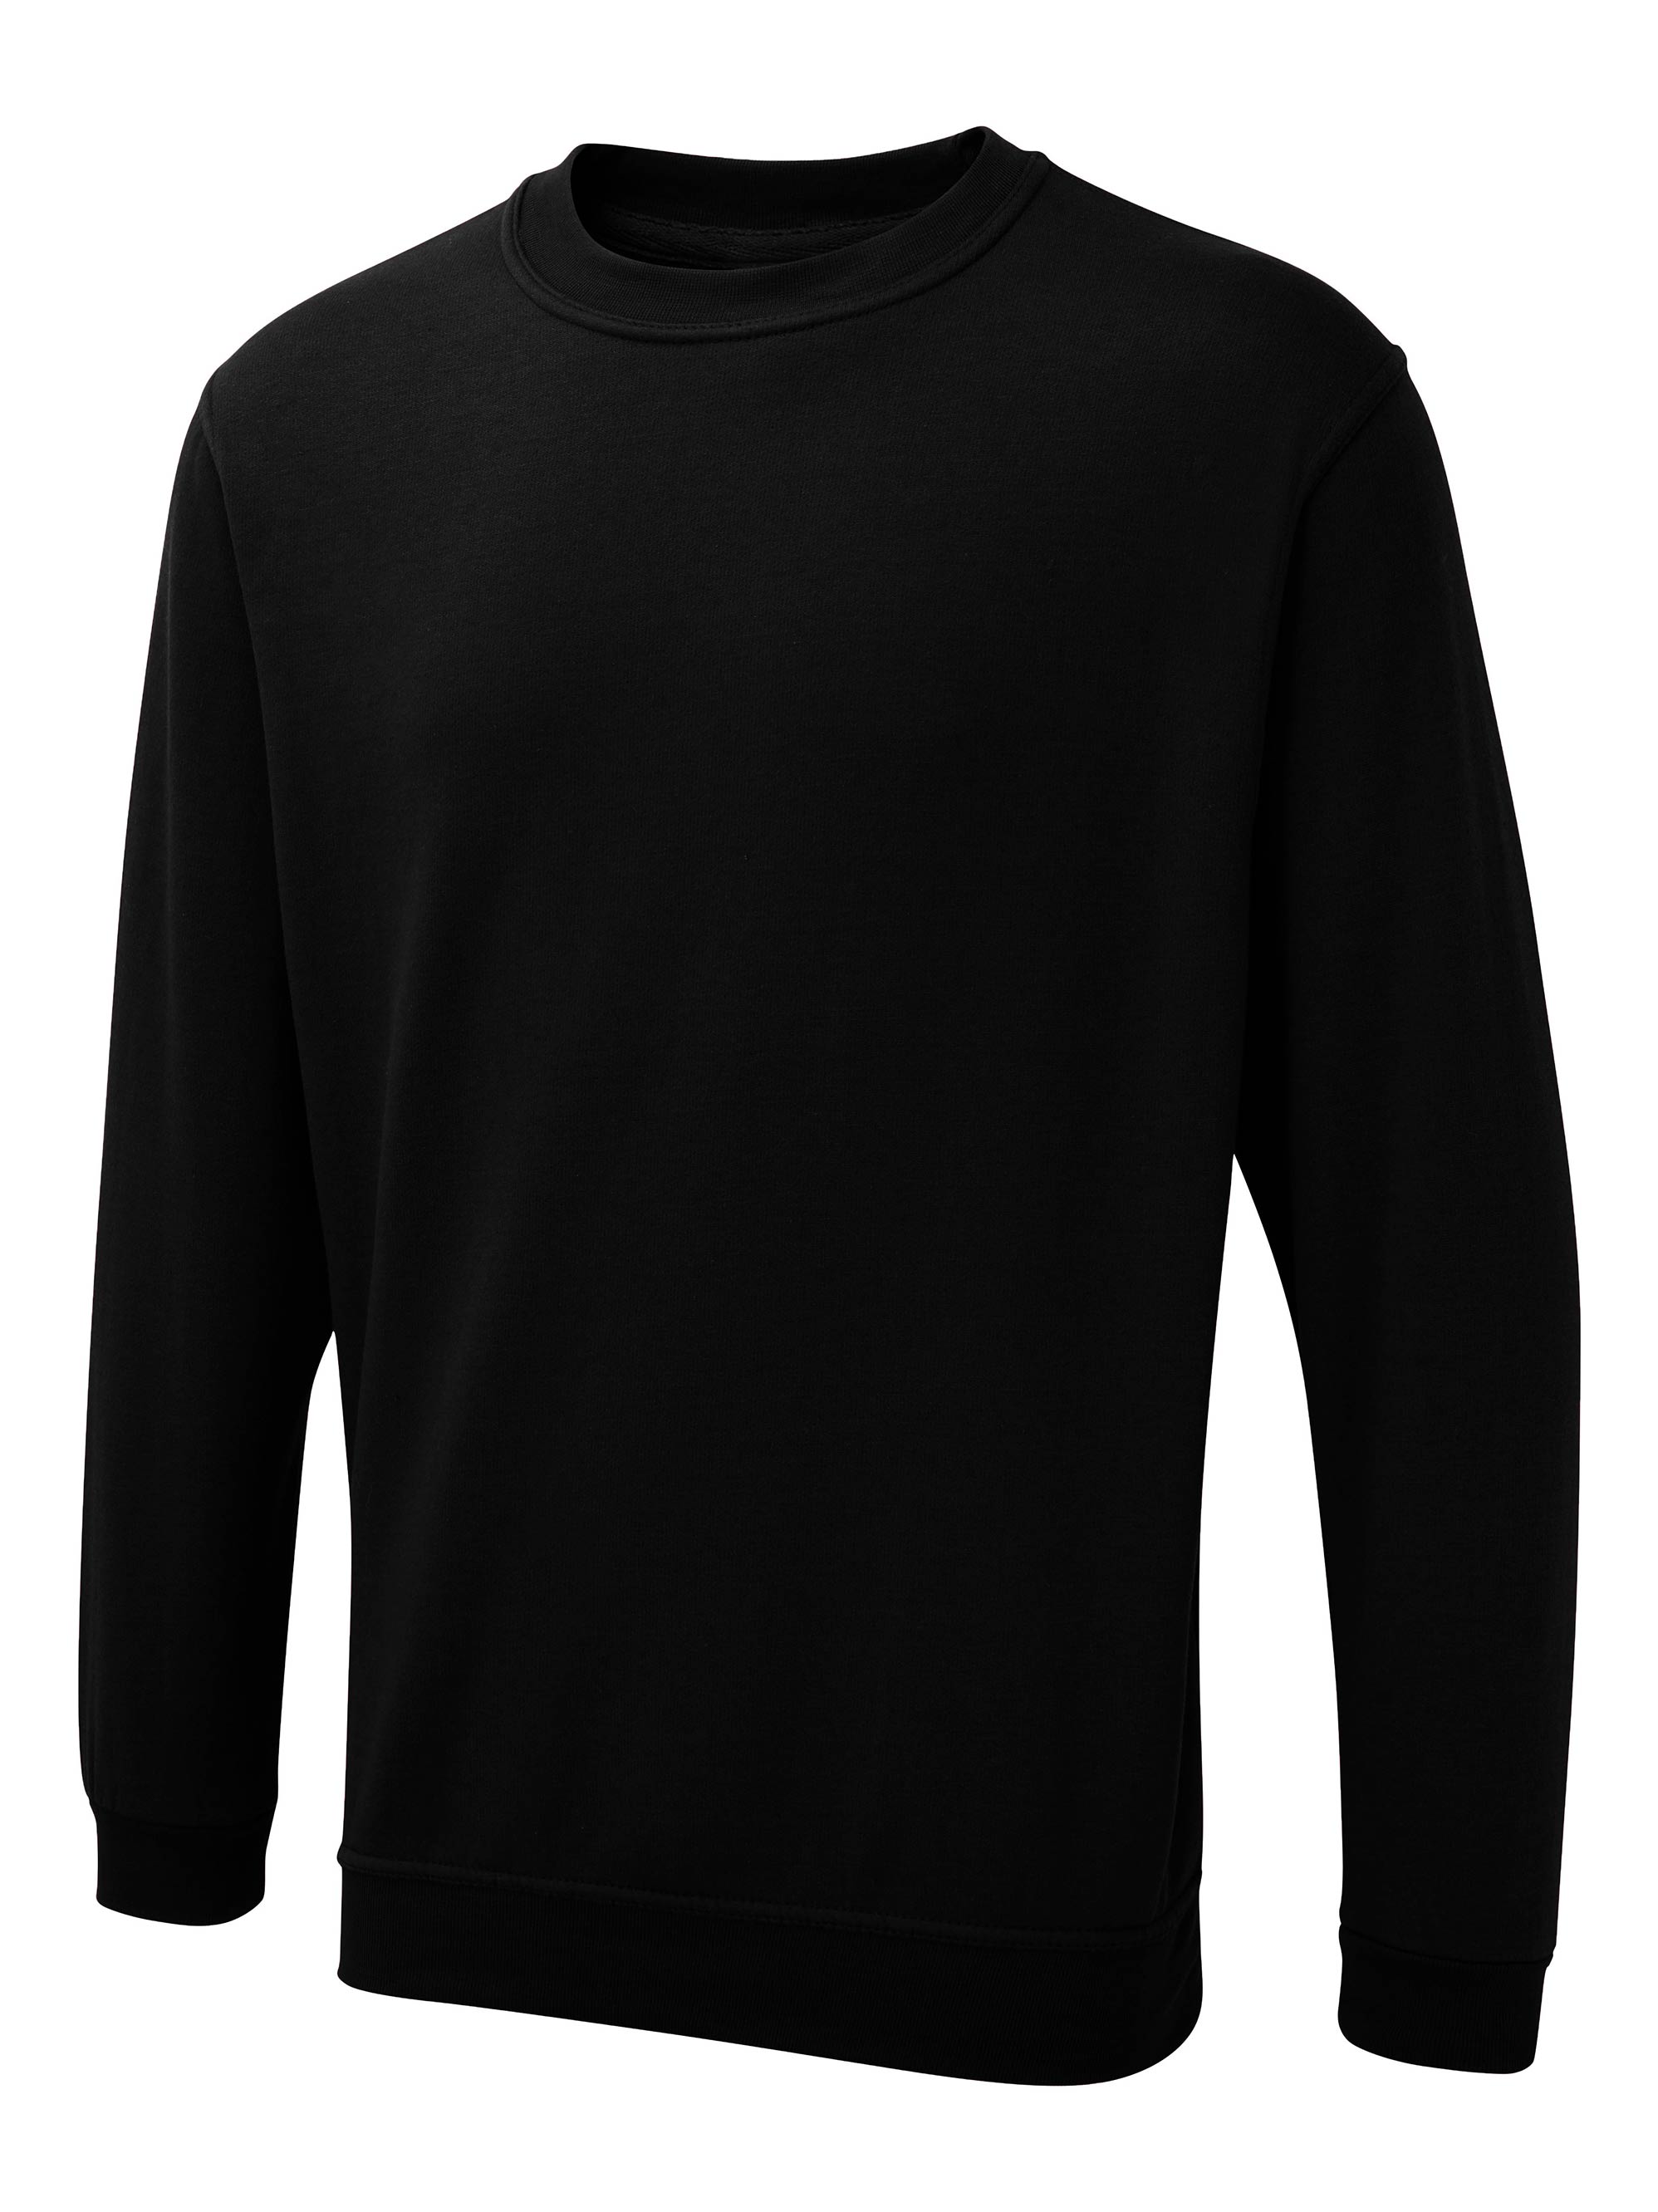 Uneek The UX Sweatshirt - ux3 (Black)